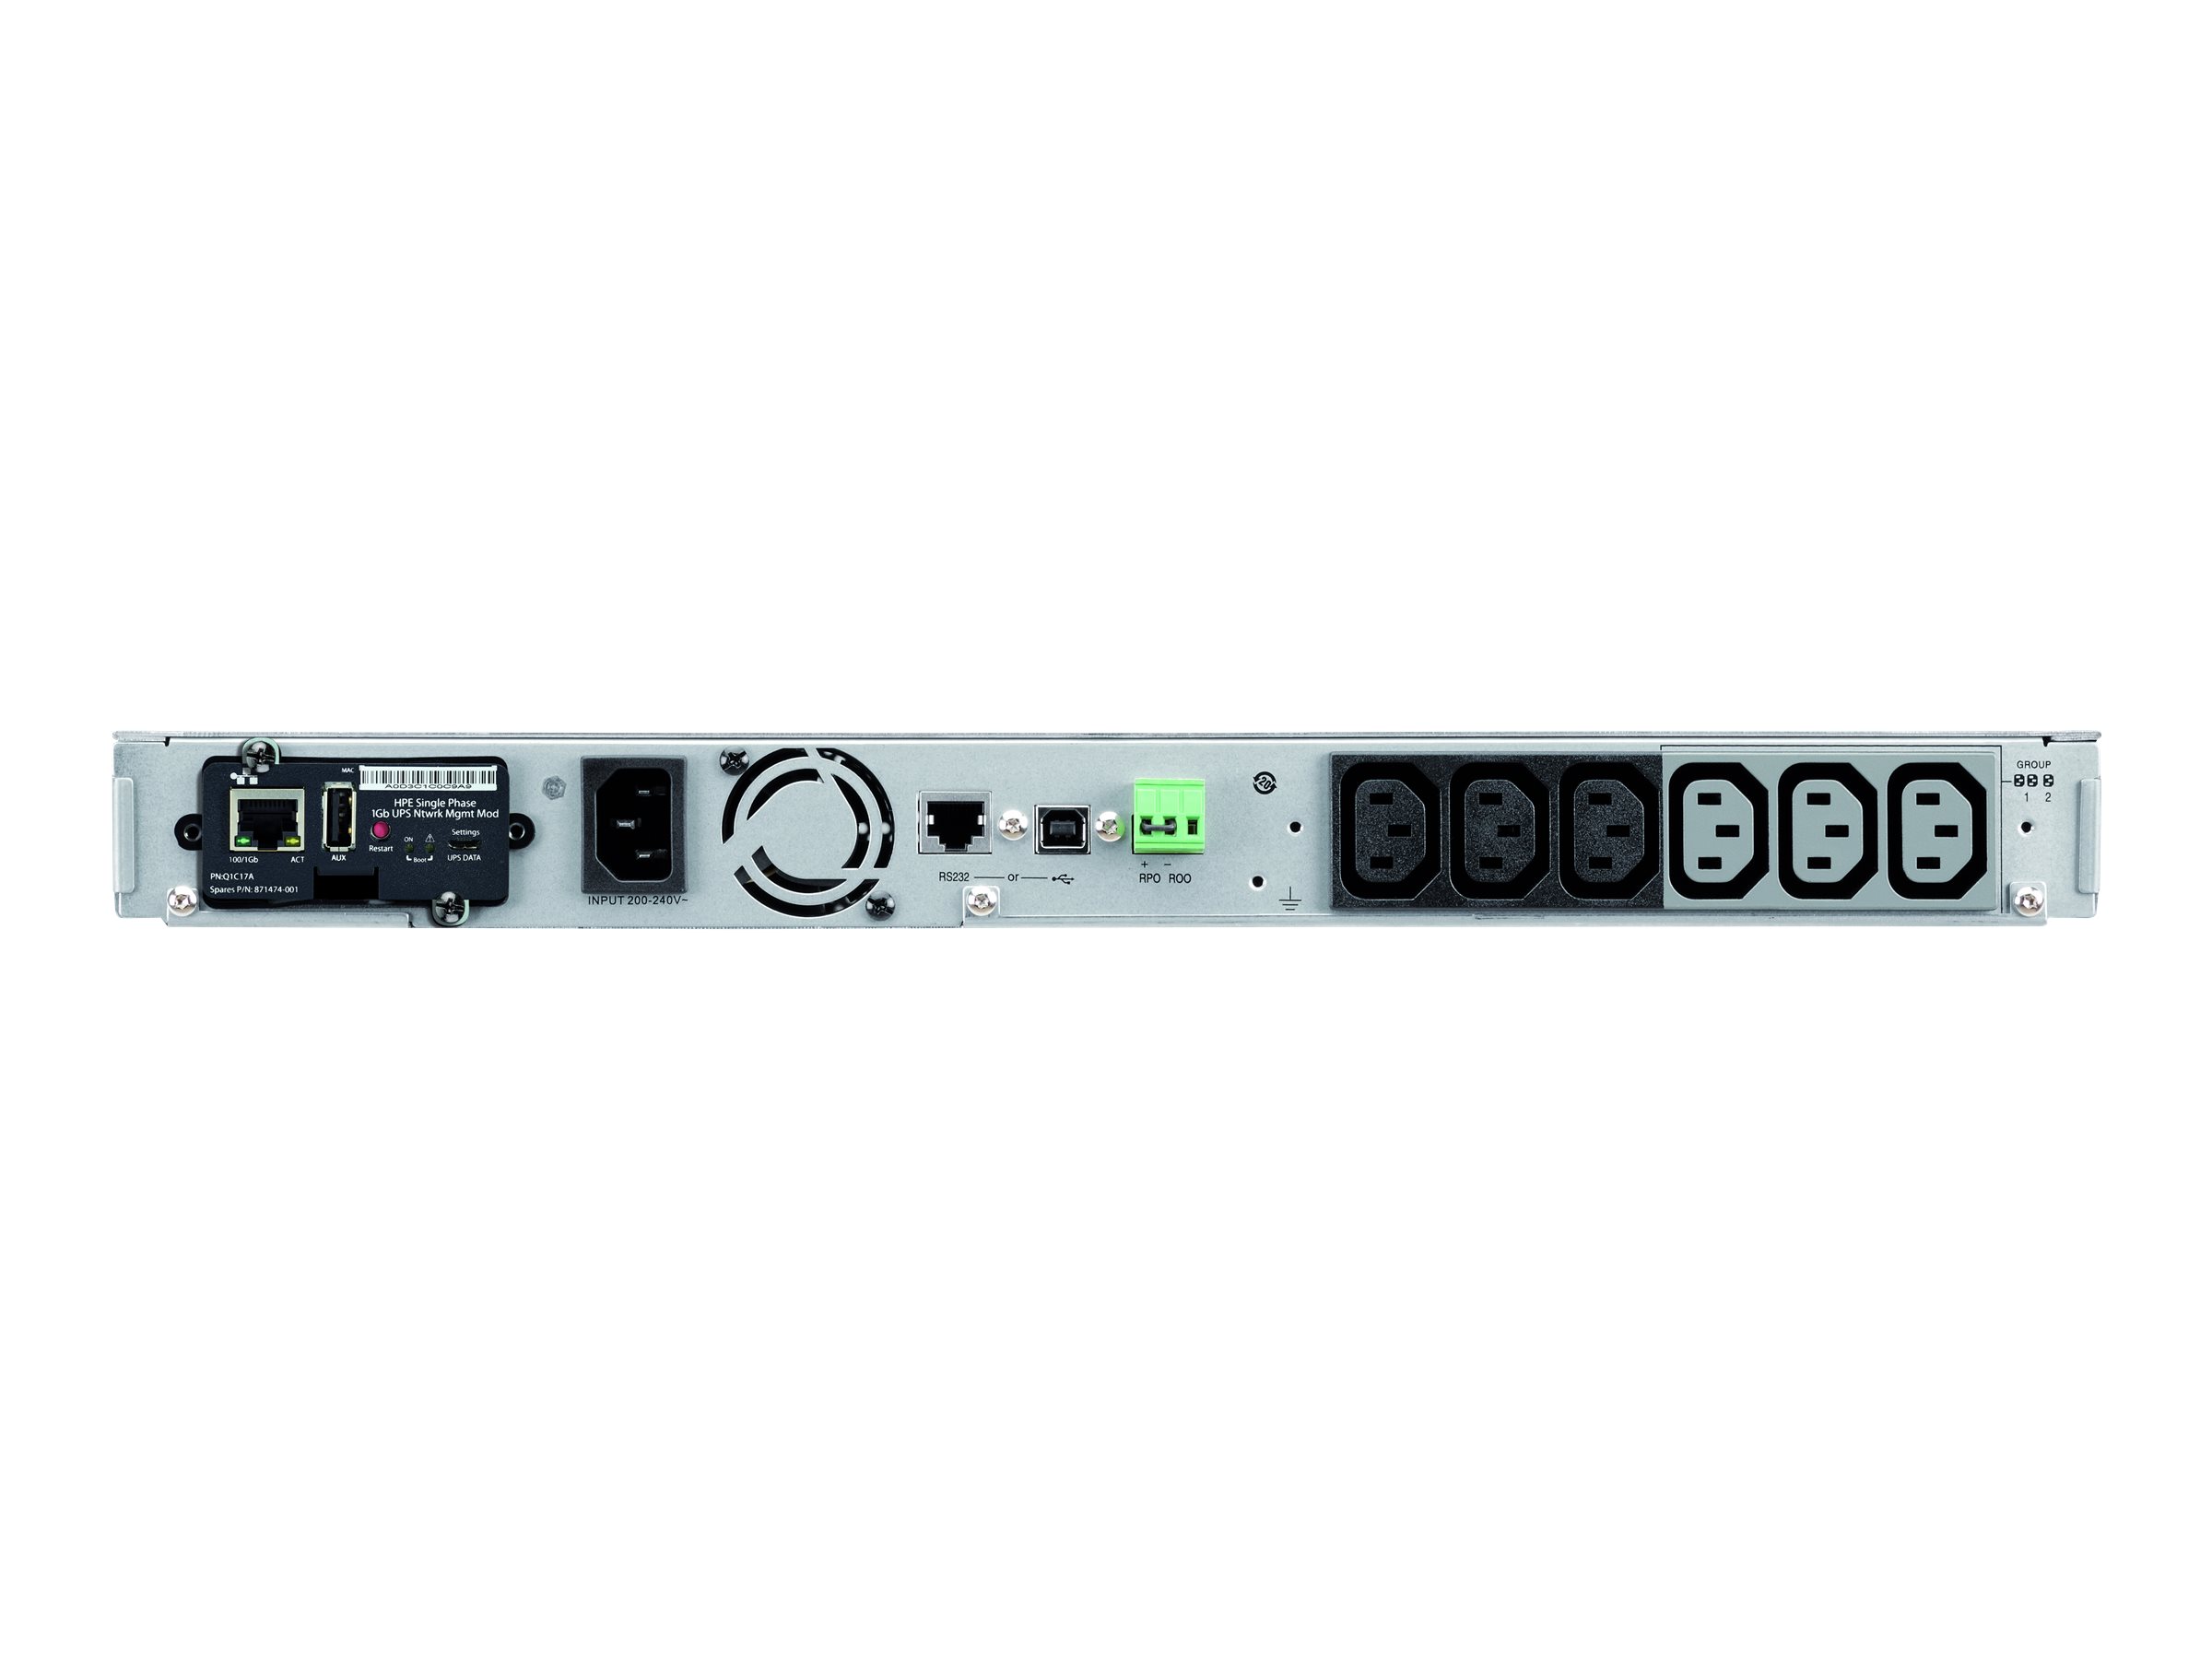 HPE R1500 G5 - USV (Rack - einbaufhig) - Wechselstrom 220/230/240 V - 1100 Watt - 1550 VA